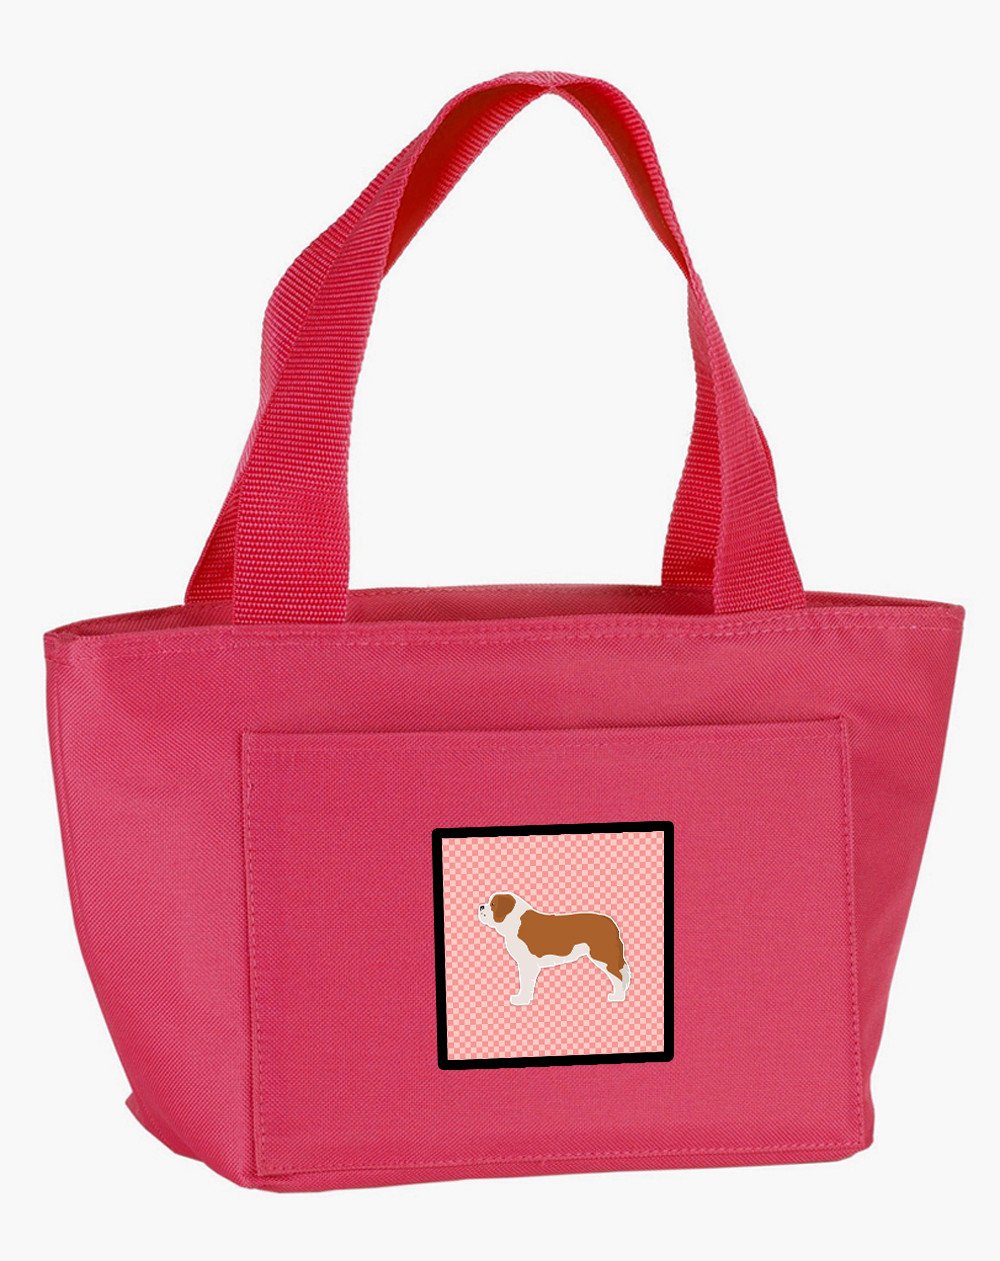 Saint Bernard Checkerboard Pink Lunch Bag BB3676PK-8808 by Caroline's Treasures